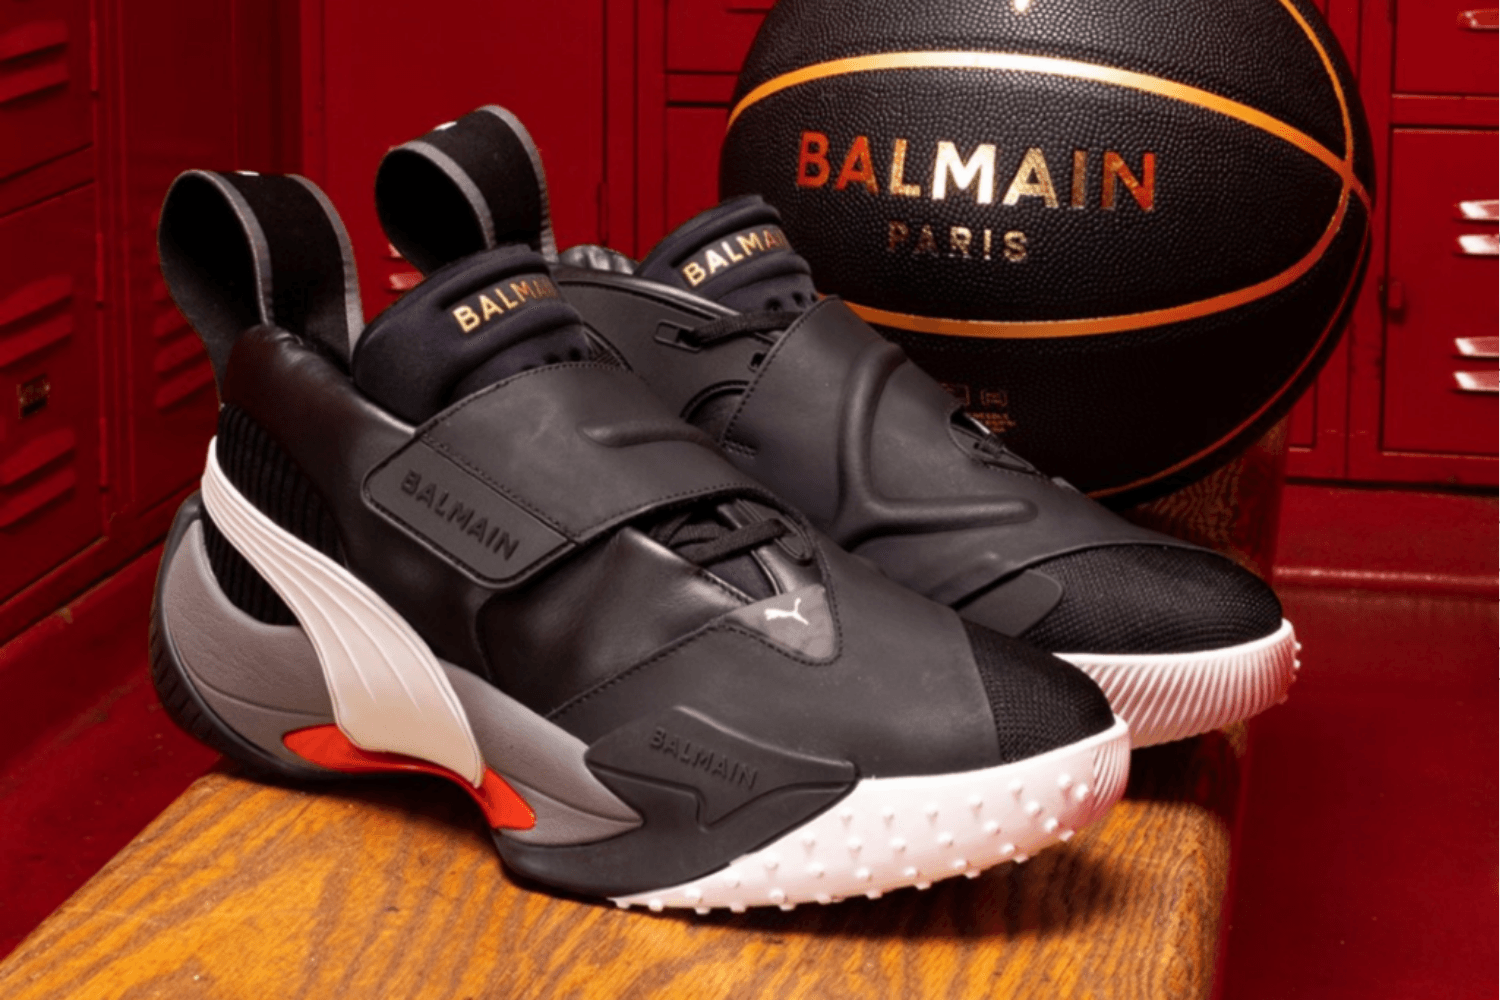 PUMA x Balmain release Special Basketball shoe